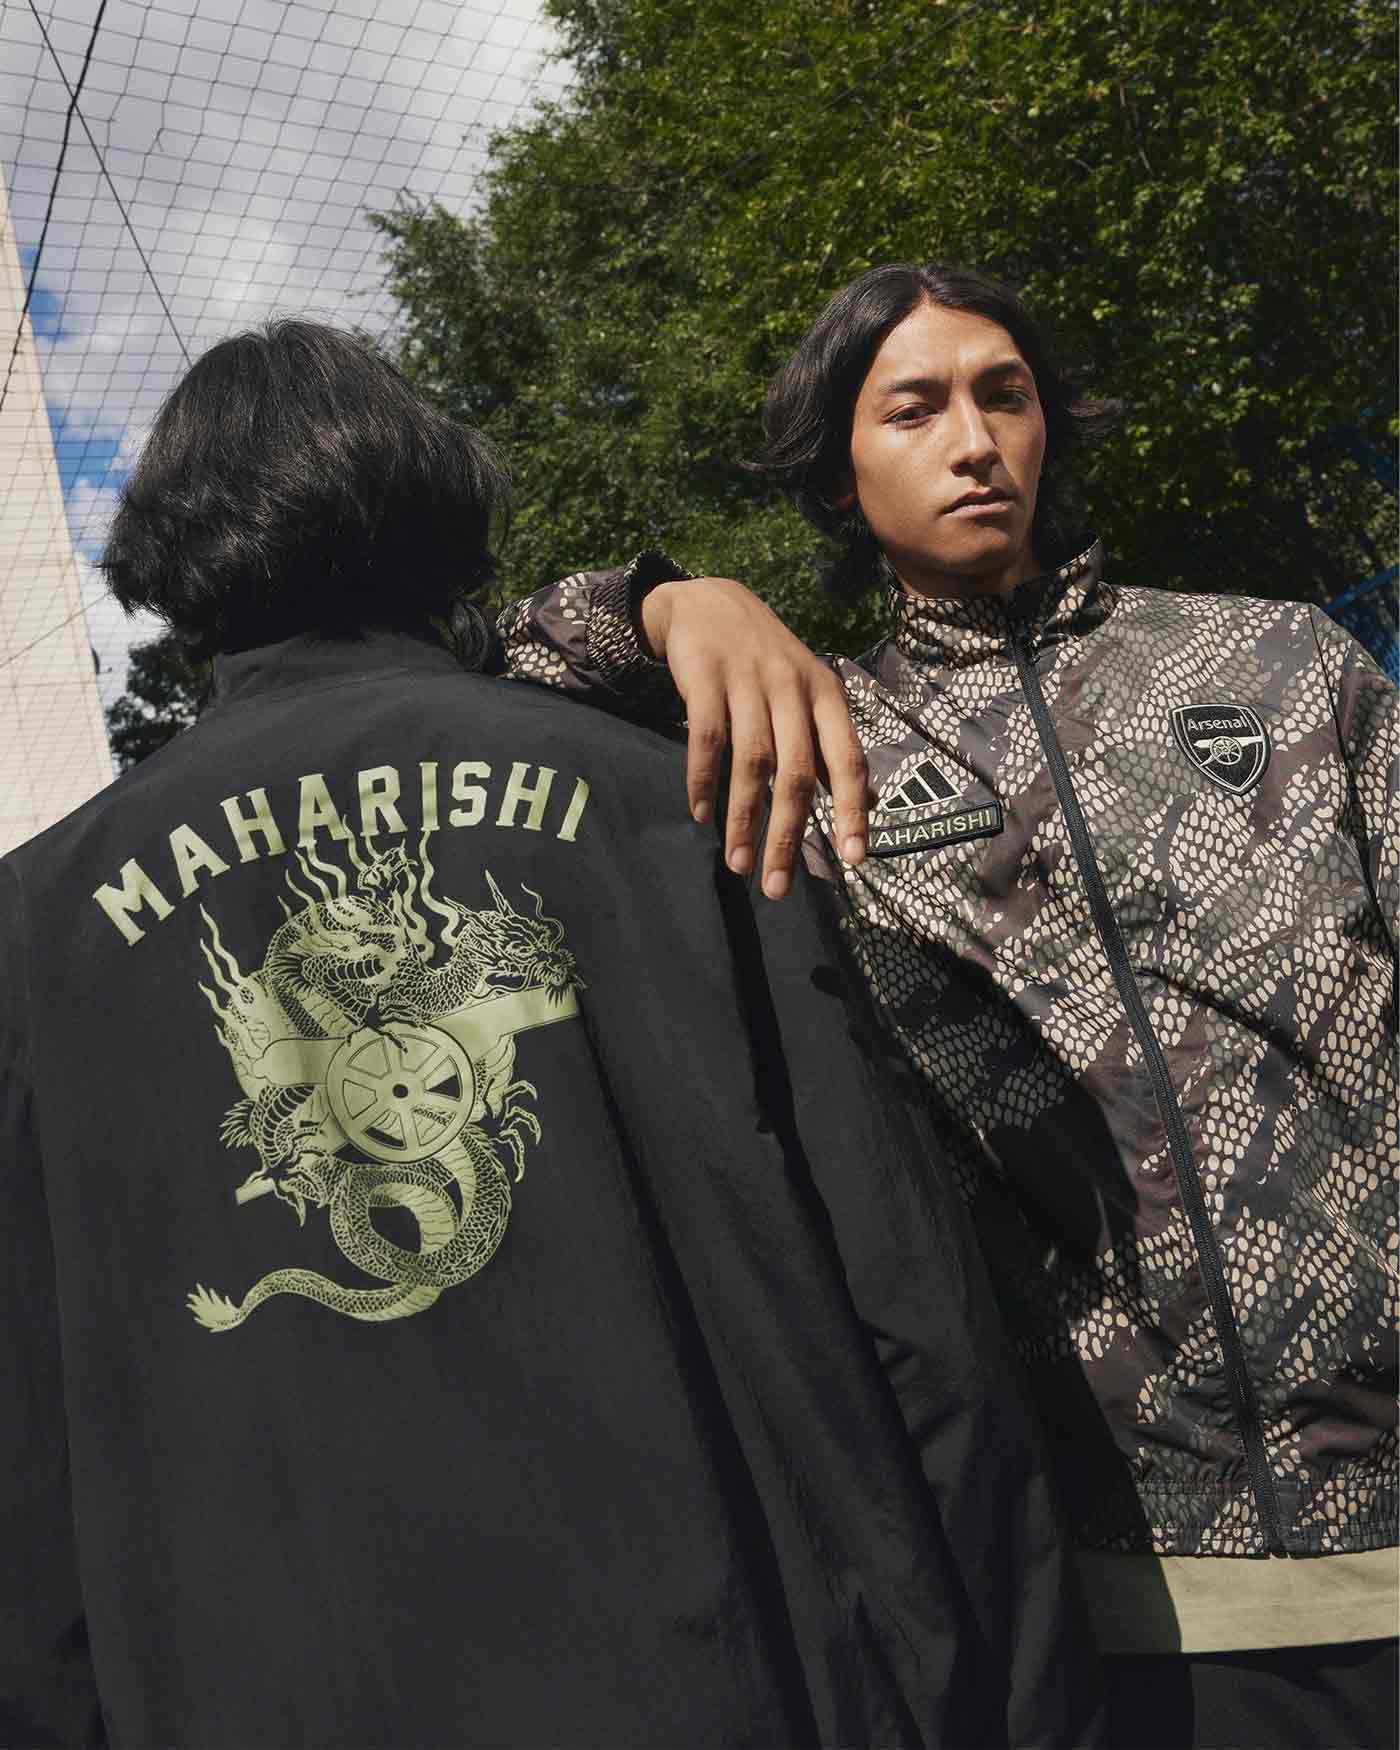 Arsenal and adidas reveal new Maharishi clothing range that's a